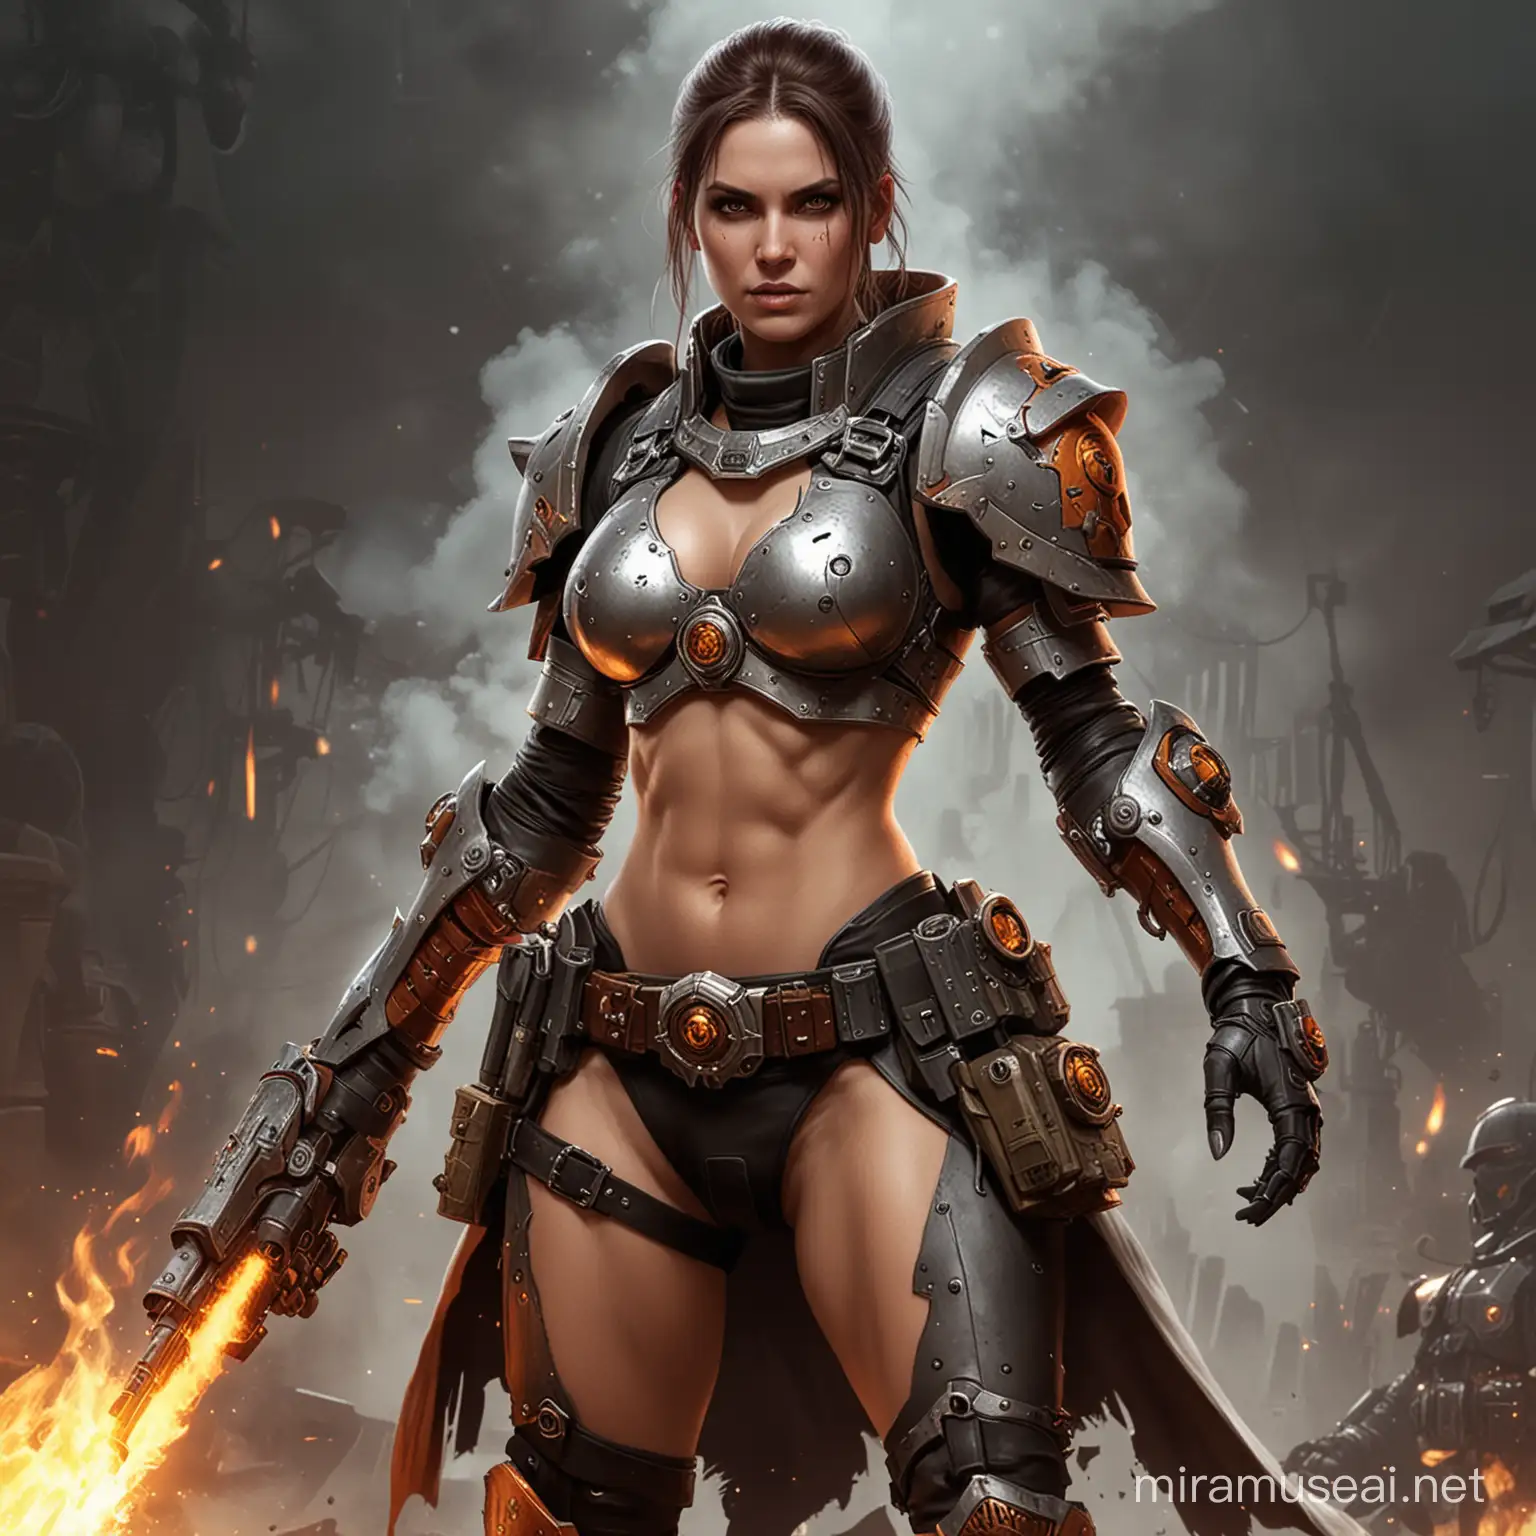 Futuristic Female Pyromancer Psyker Melee Fighter in Warhammer 40k Universe